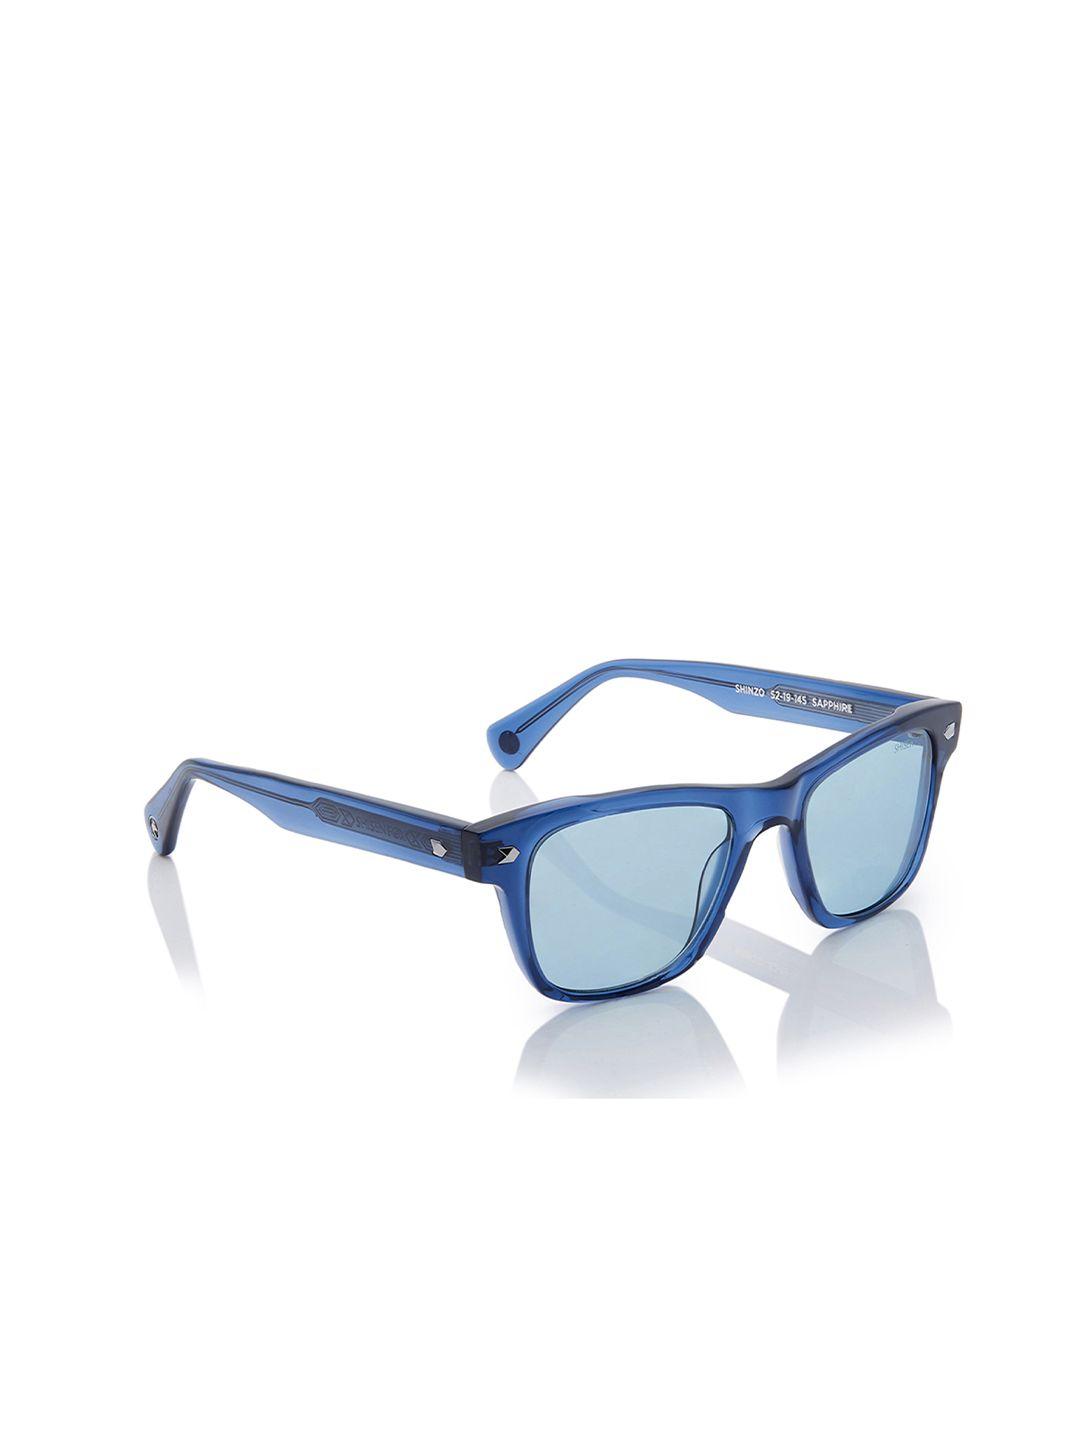 shisen fox shinzo sapphire unisex square sunglasses with uv protected lens